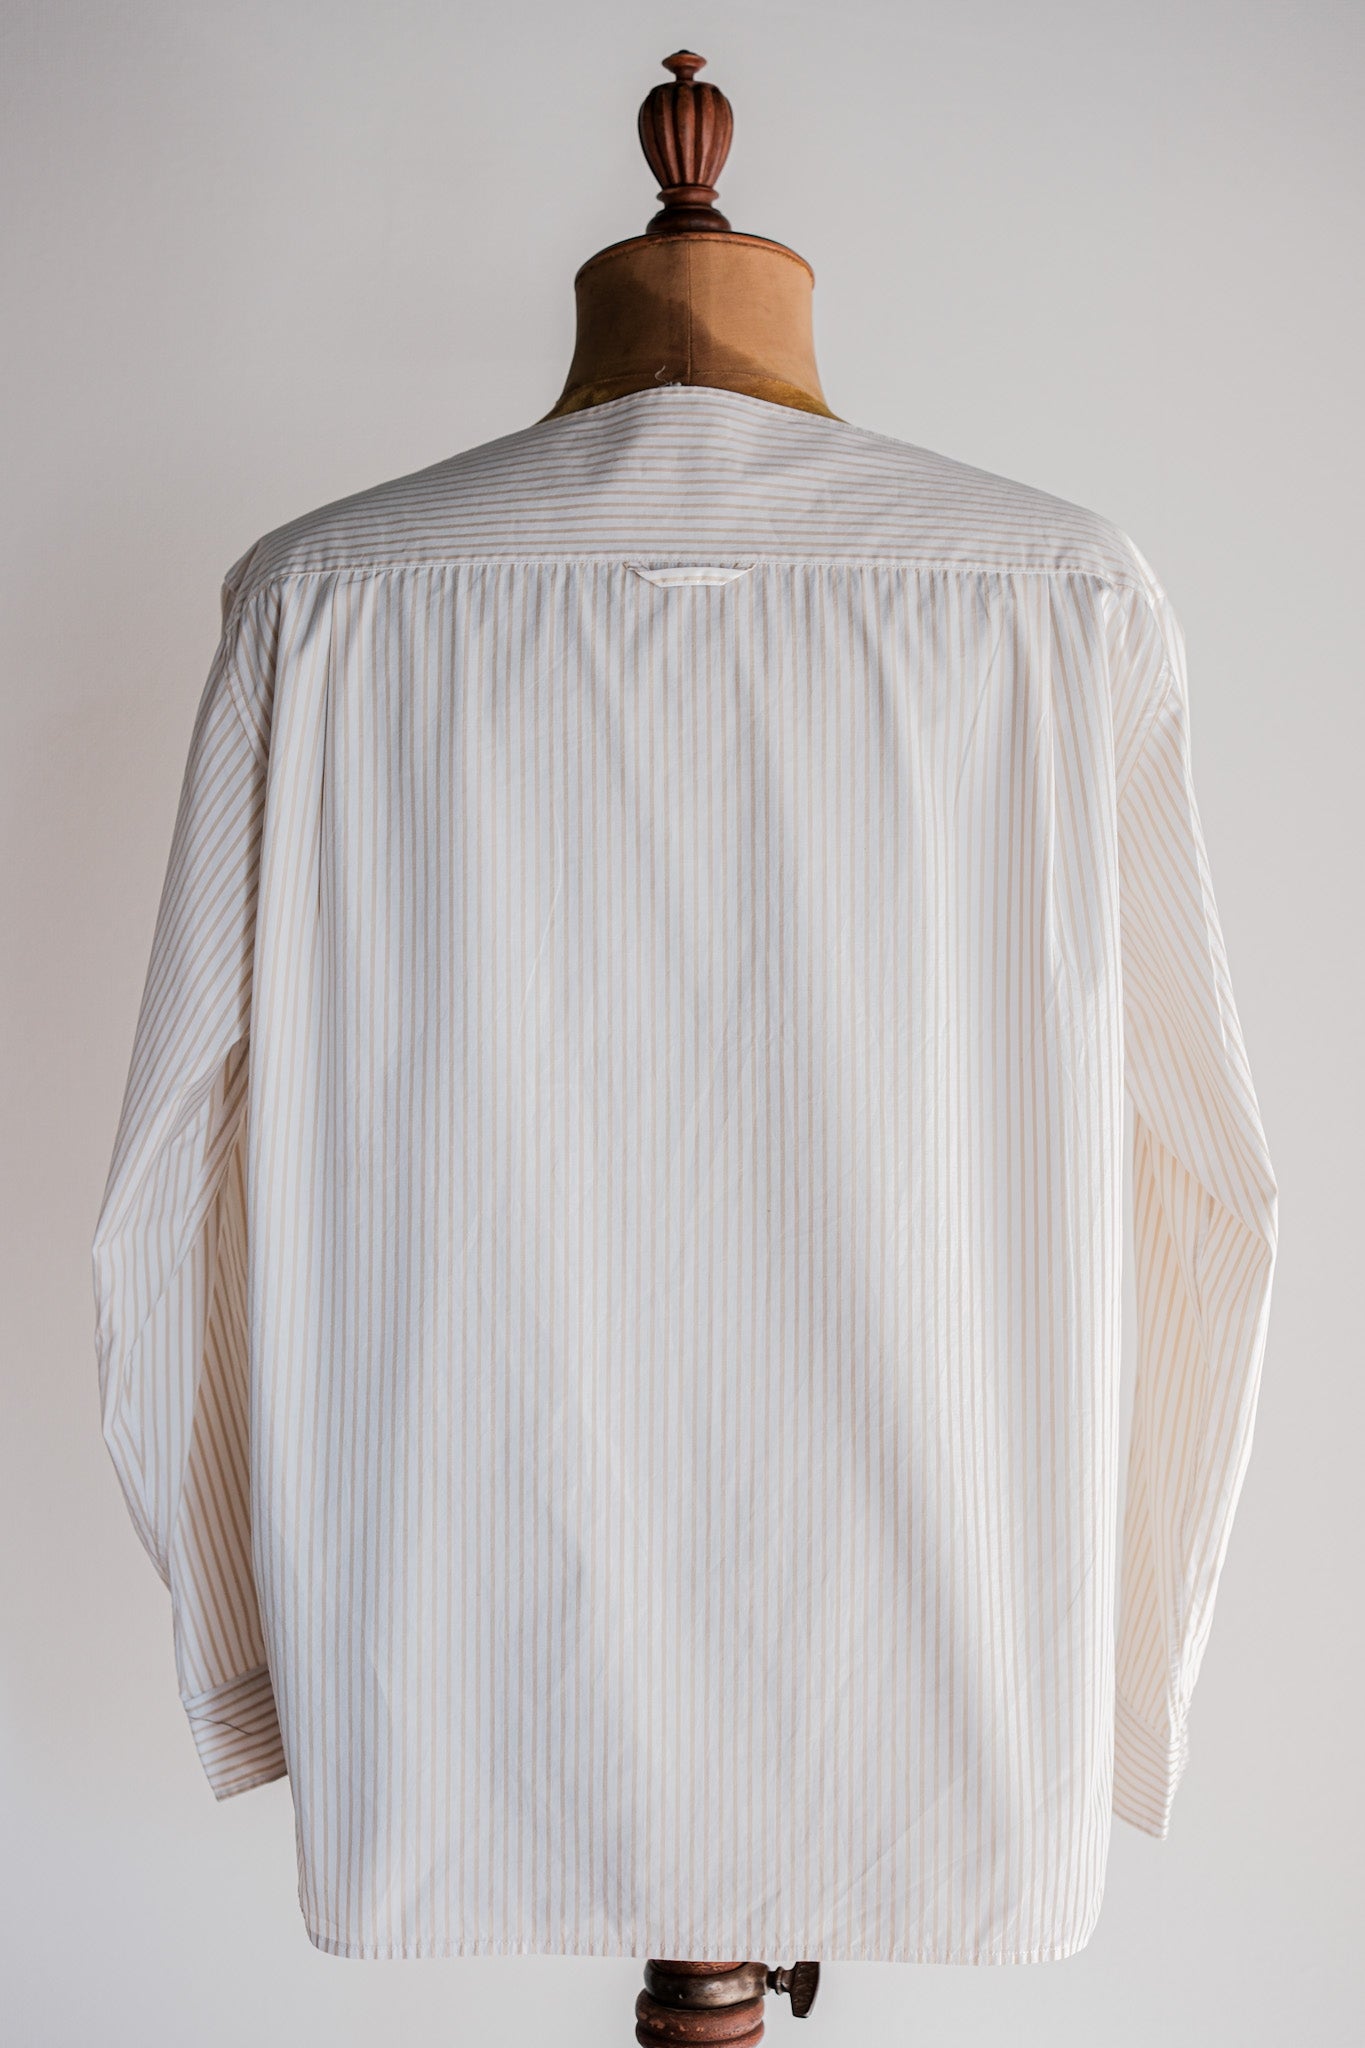 【~00's】Old Hermès Paris Boat Neck Cotton Striped Shirt Size.40 by Martin Margiela